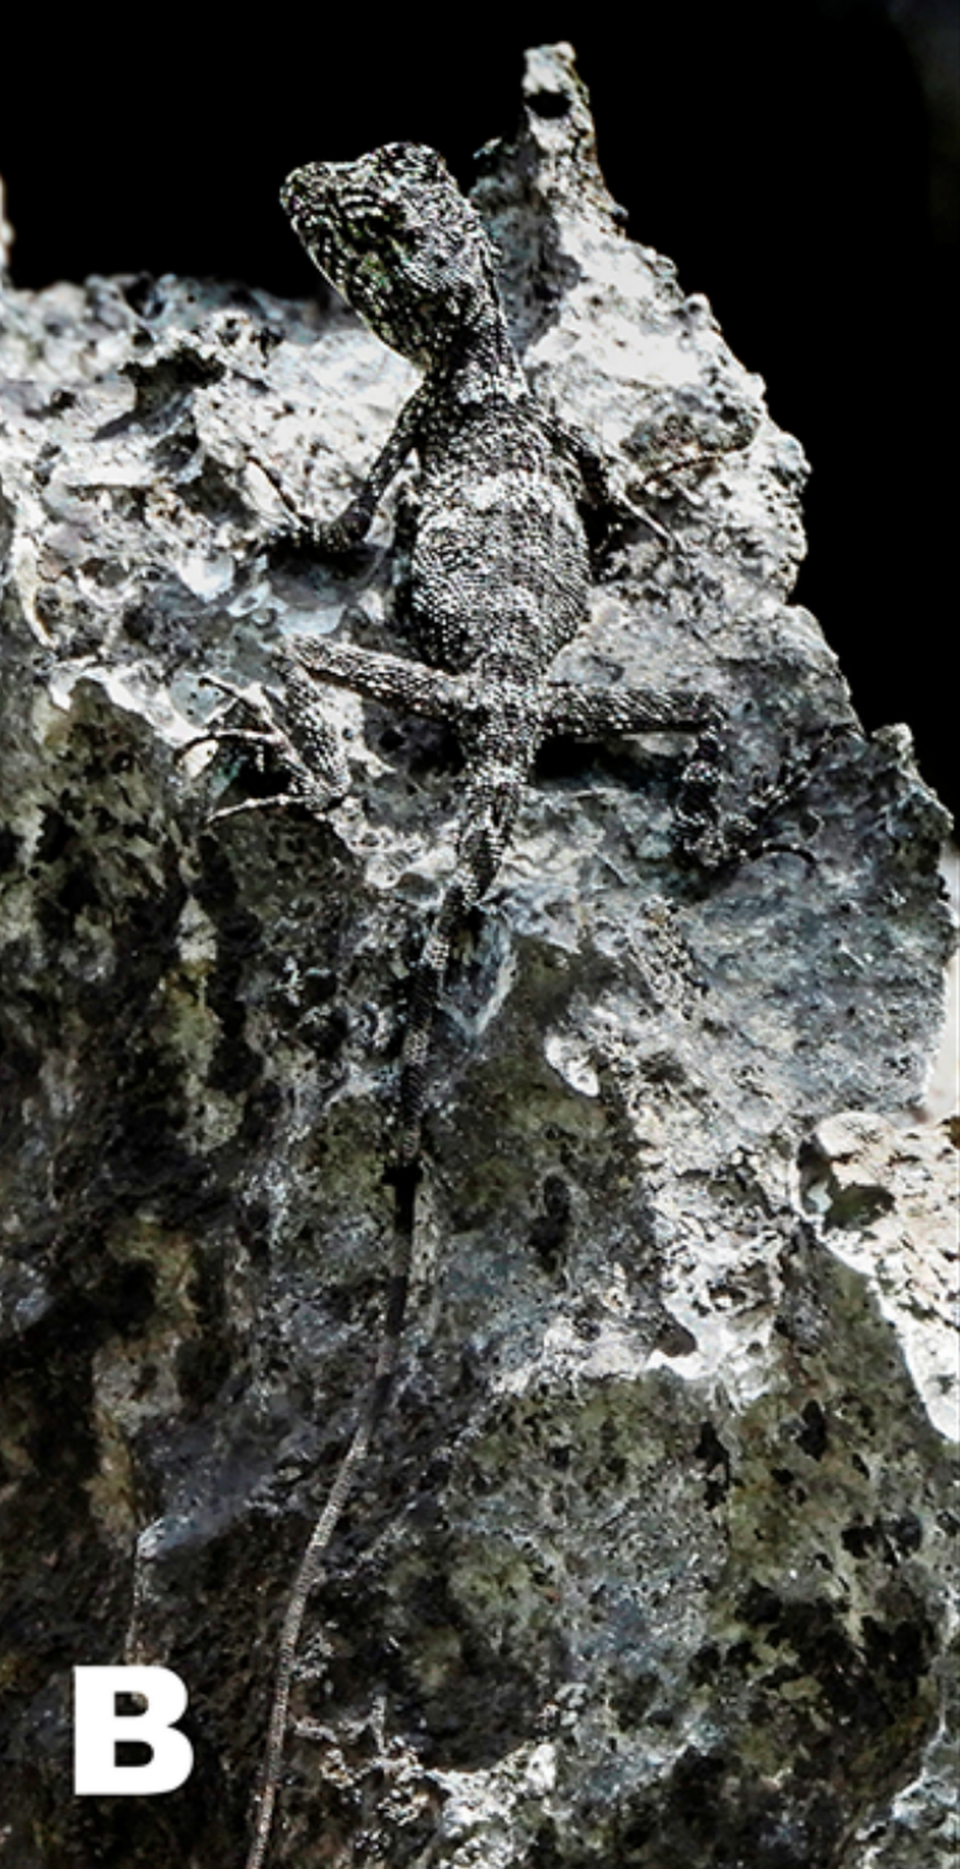 A Laodracon carsticola, or Khammouan karst dragon, perched on a rock.